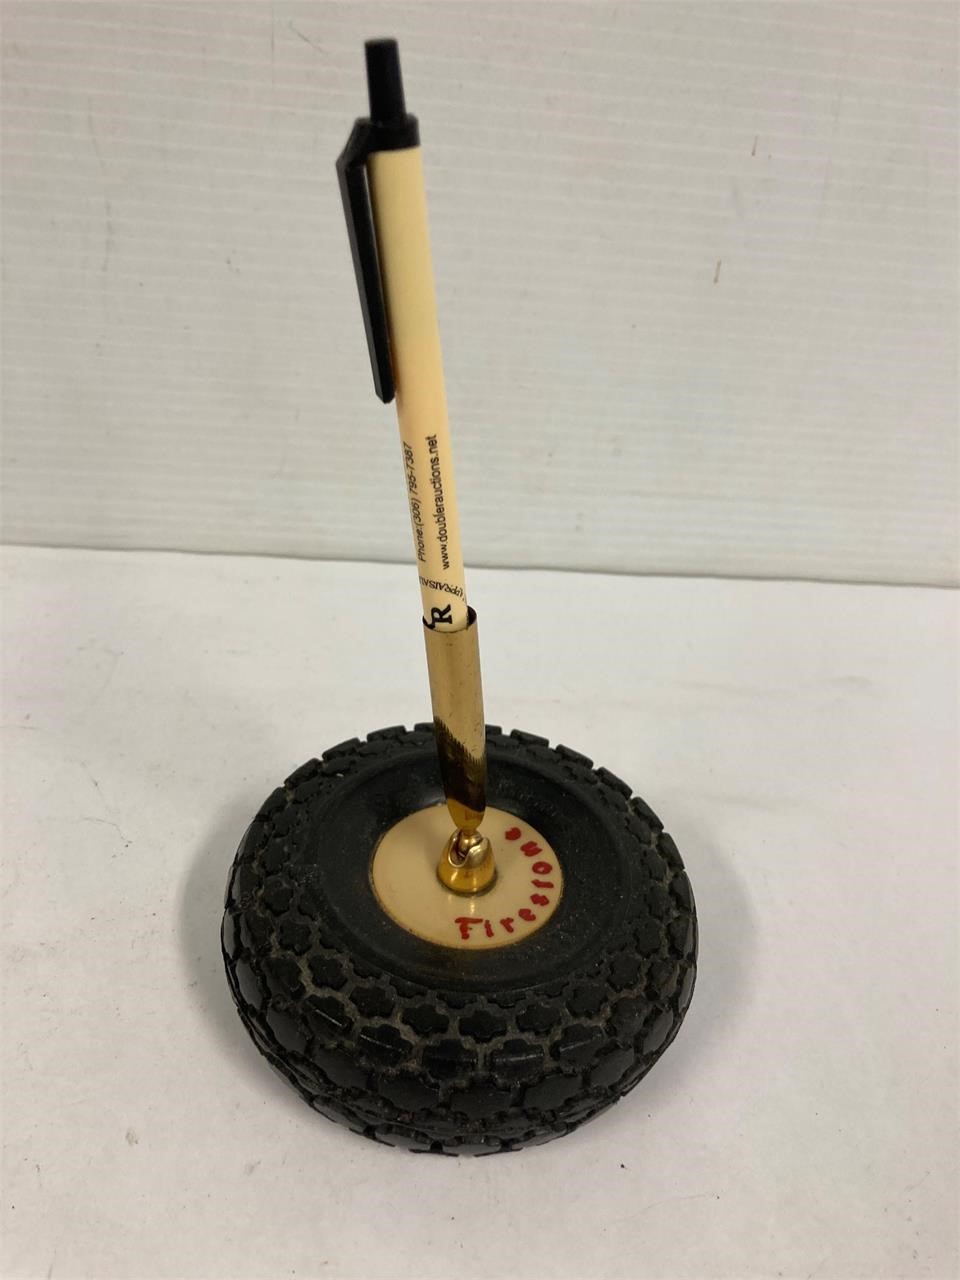 Firestone tire pen holder.